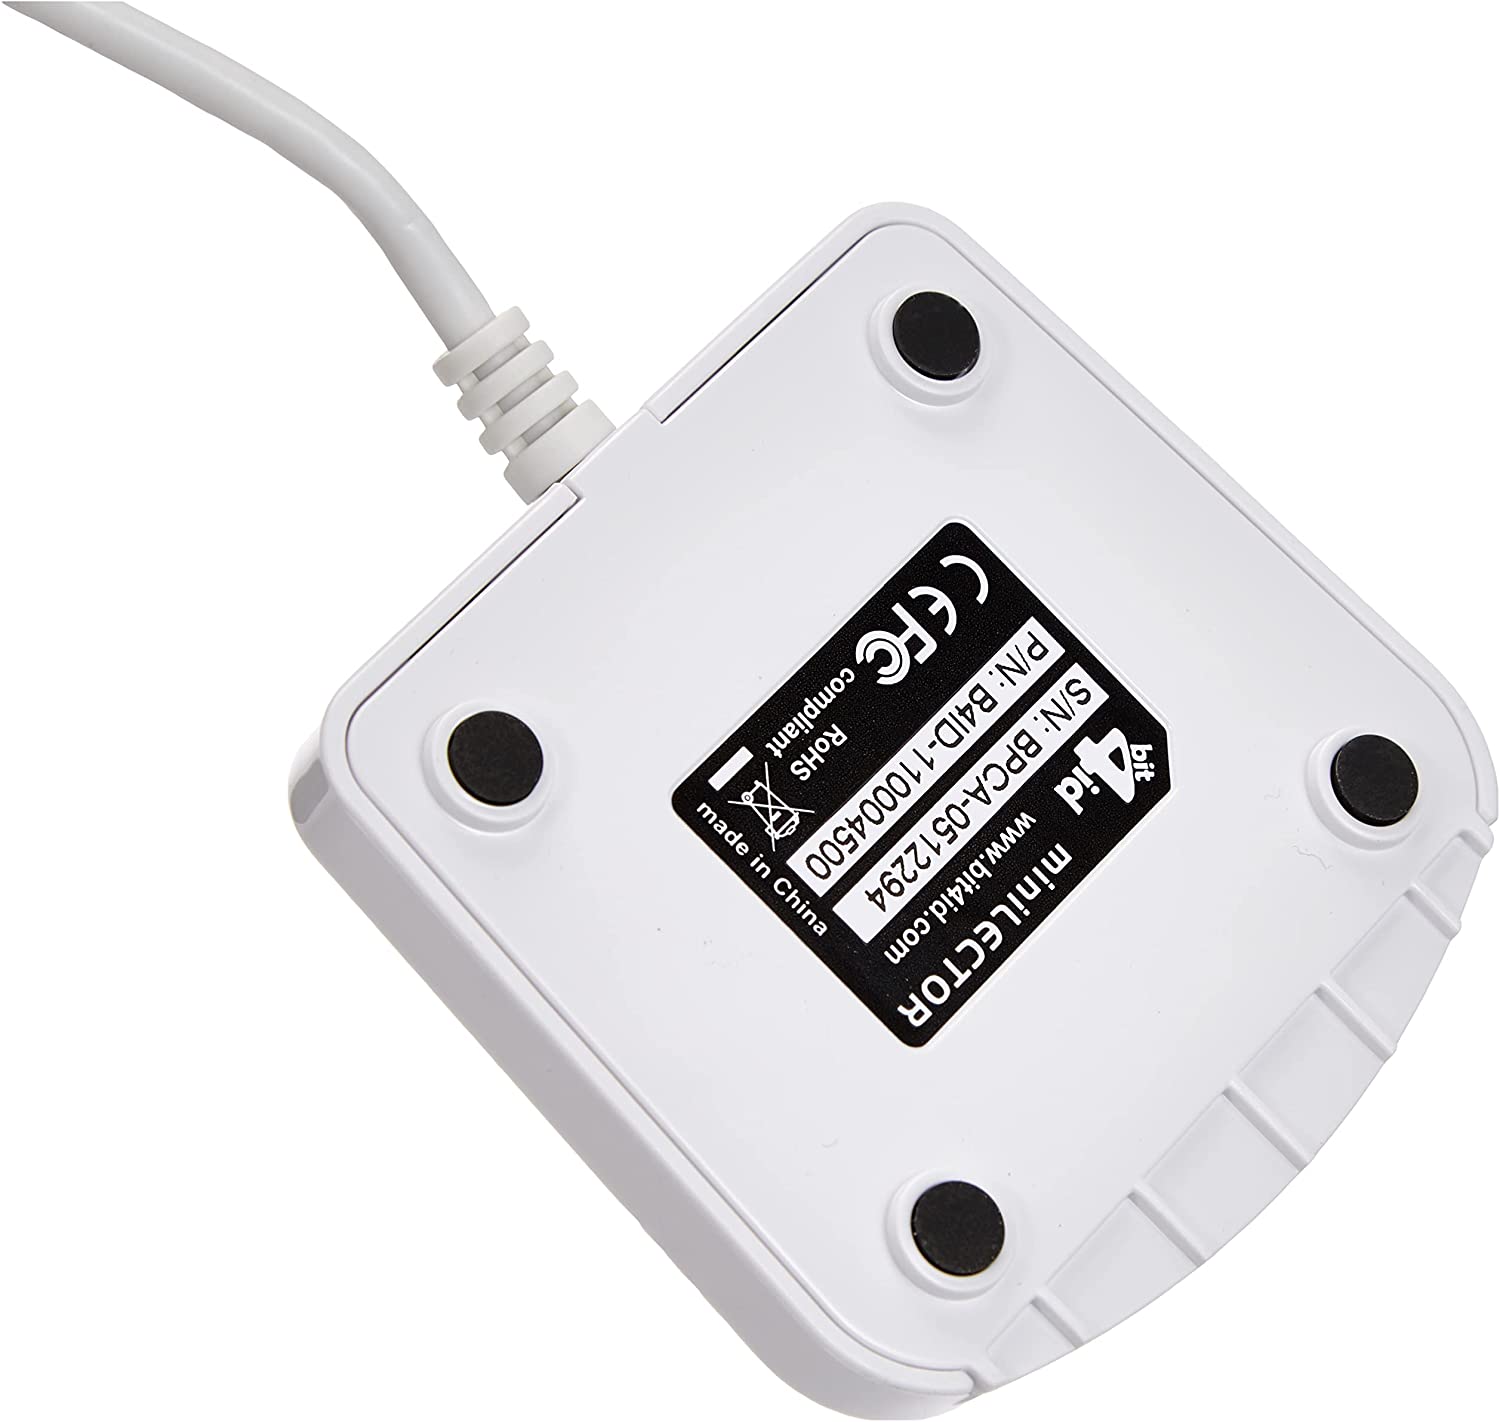 Mediante Inhalar empezar Bit4id miniLector Evo Card Readers USB 2.0 - AKIS informatica